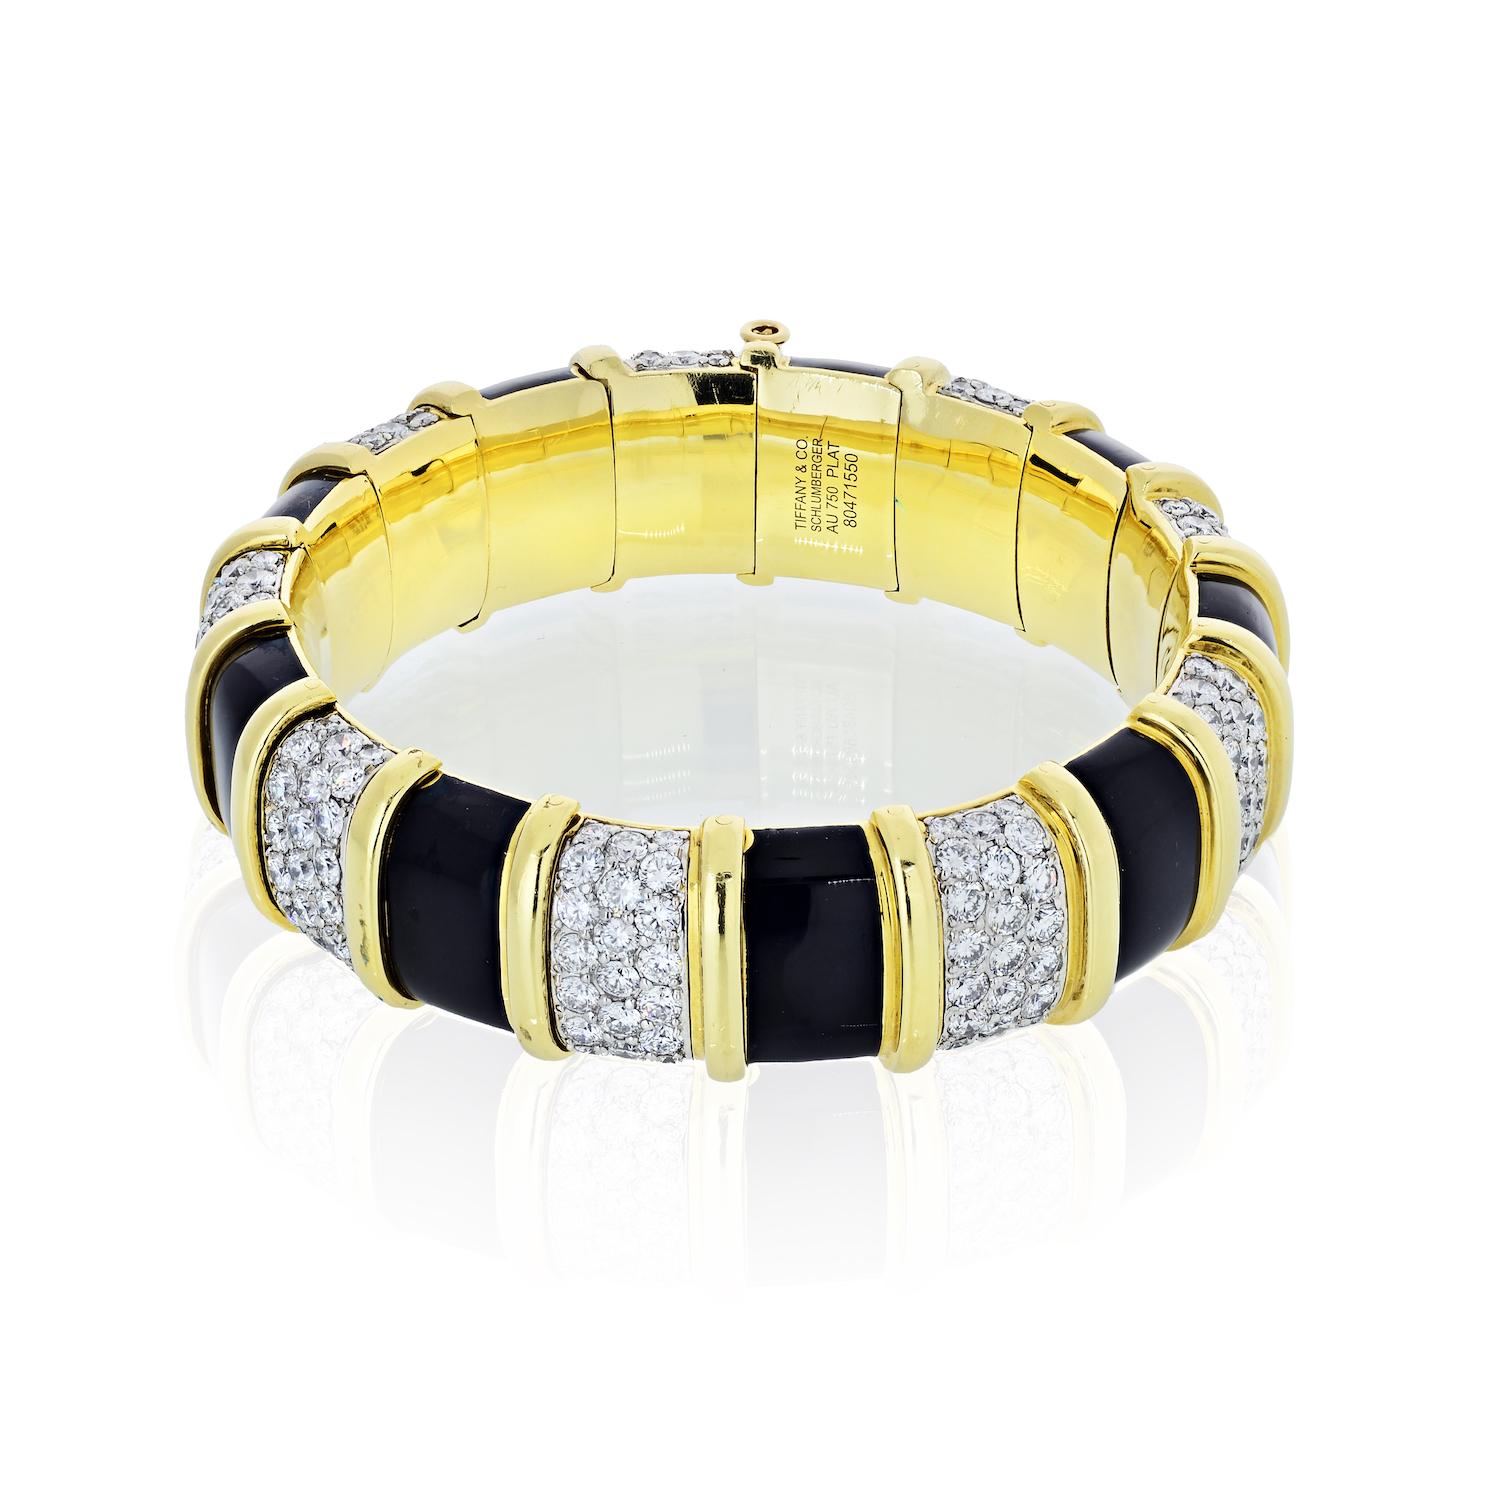 19 carat gold bracelet